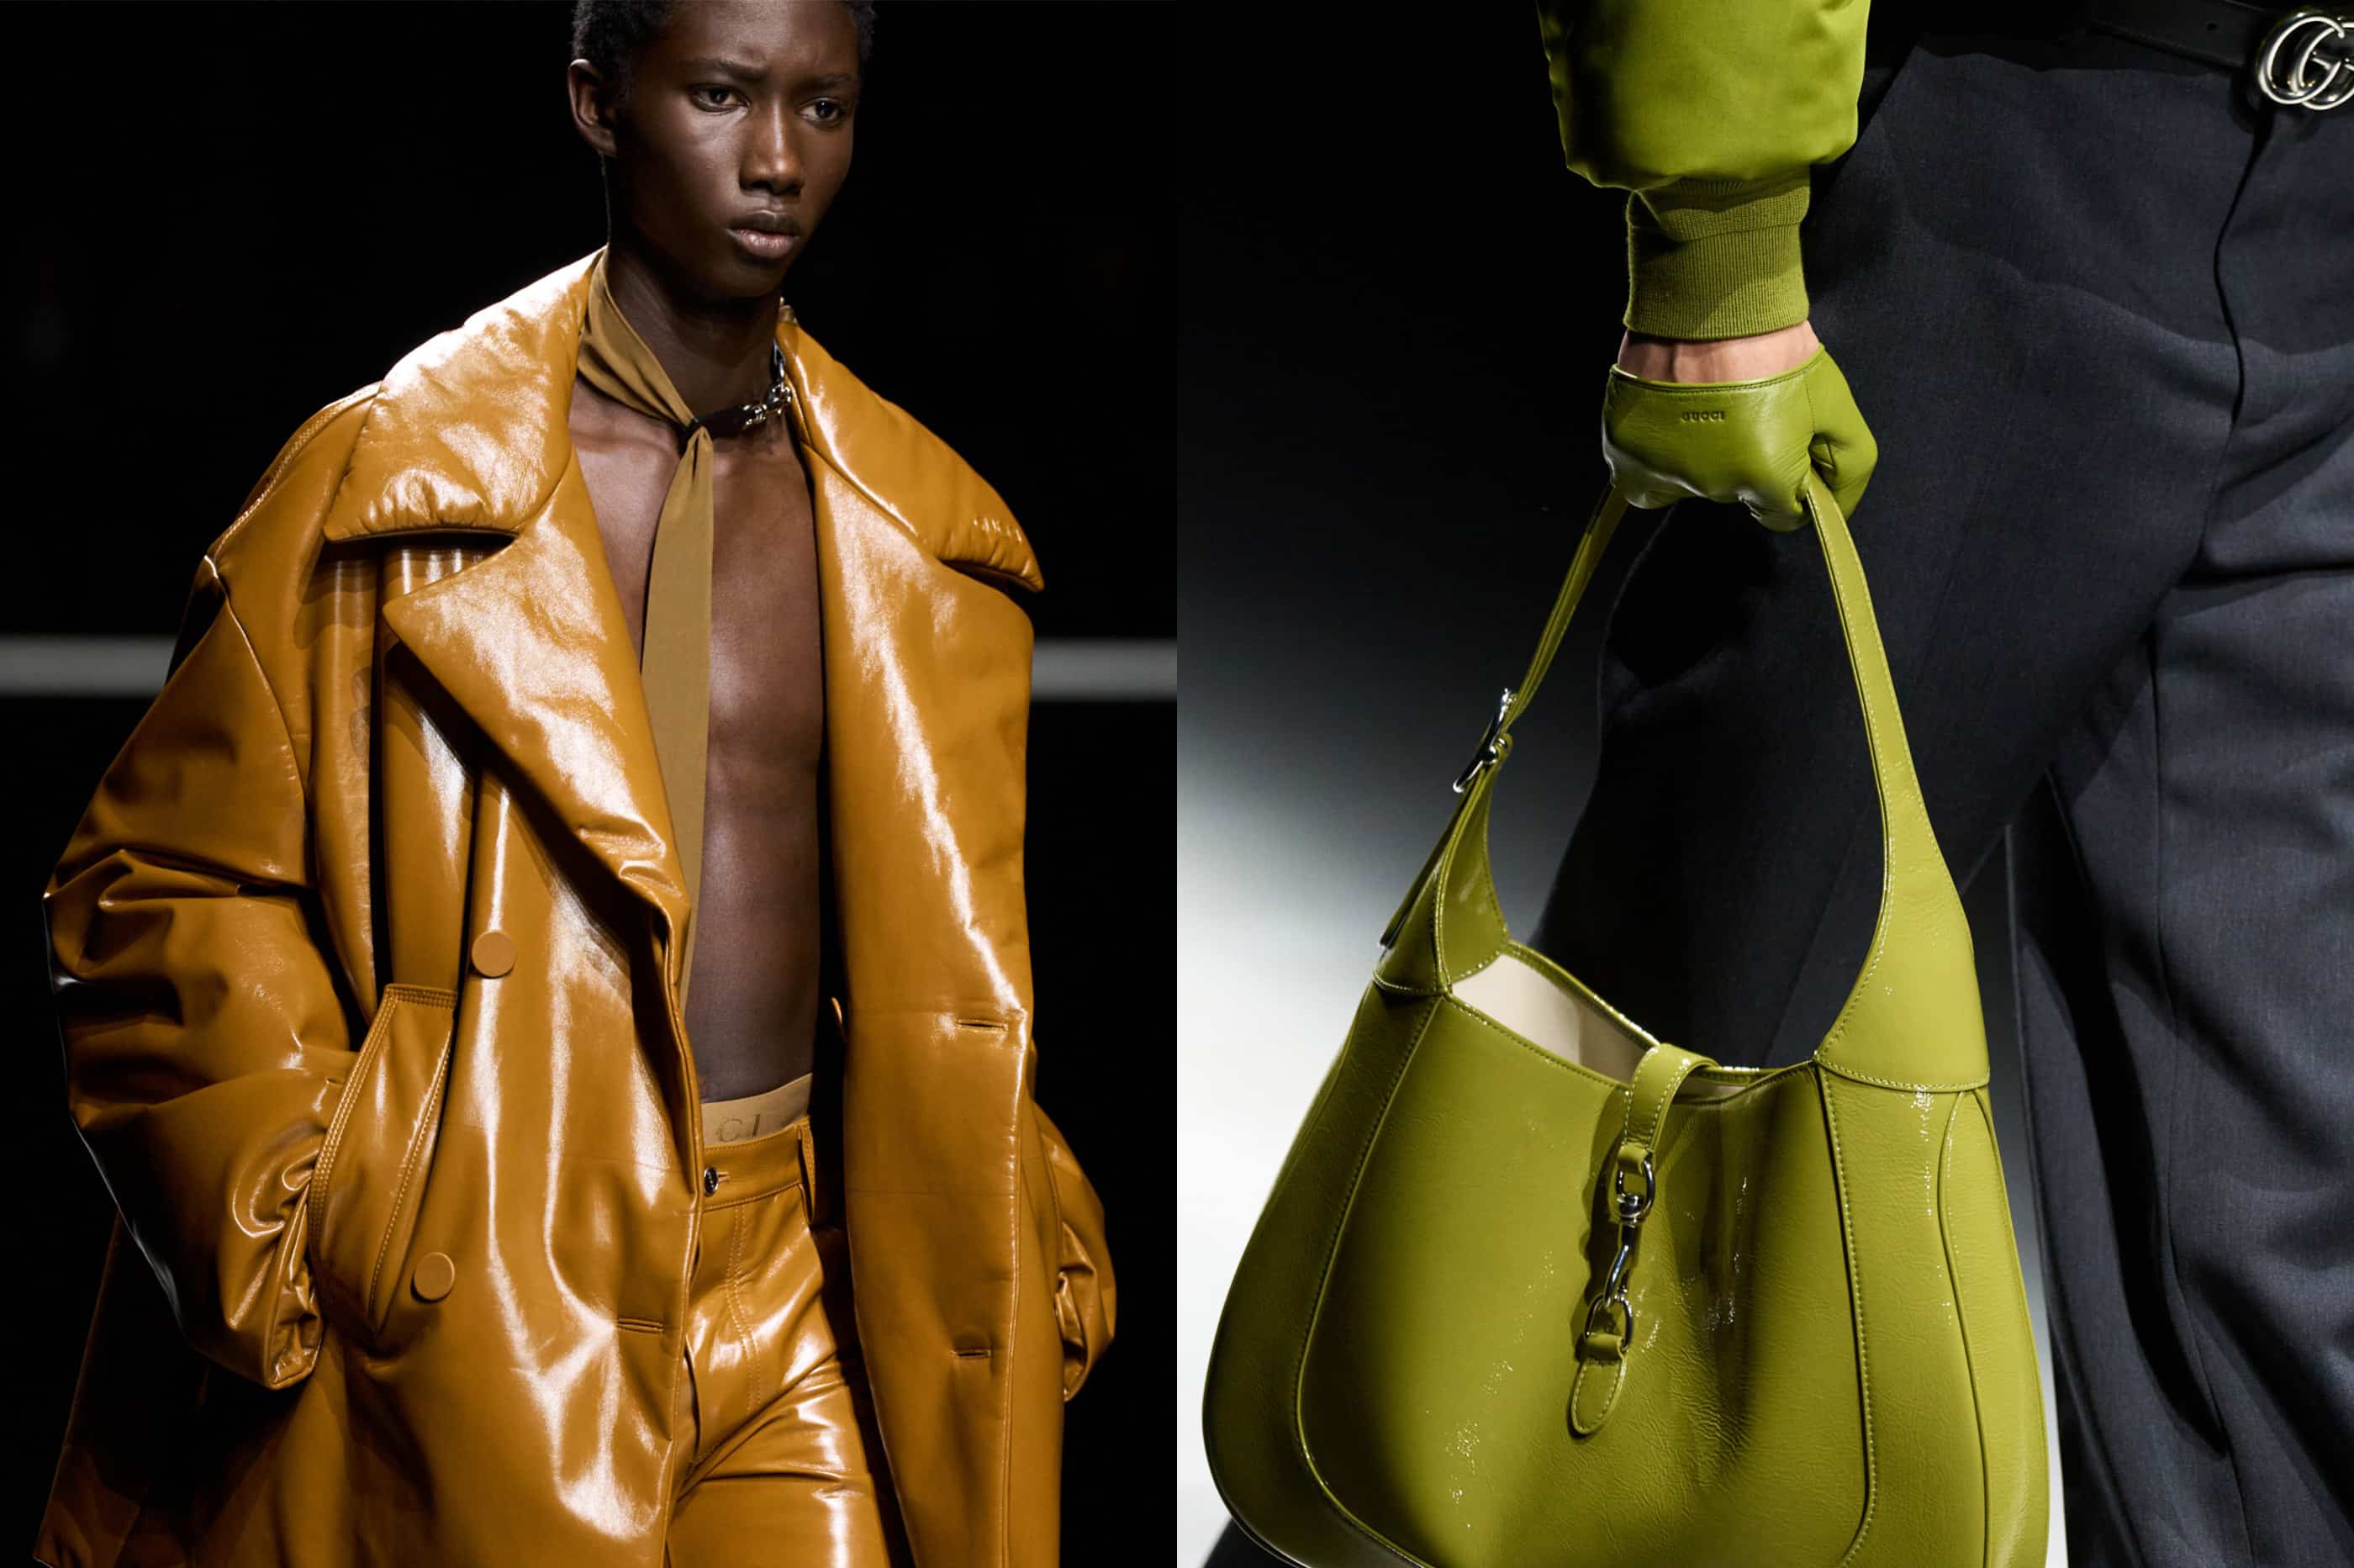 Sabato De Sarno's Gucci menswear kicks off Milan Fashion Week